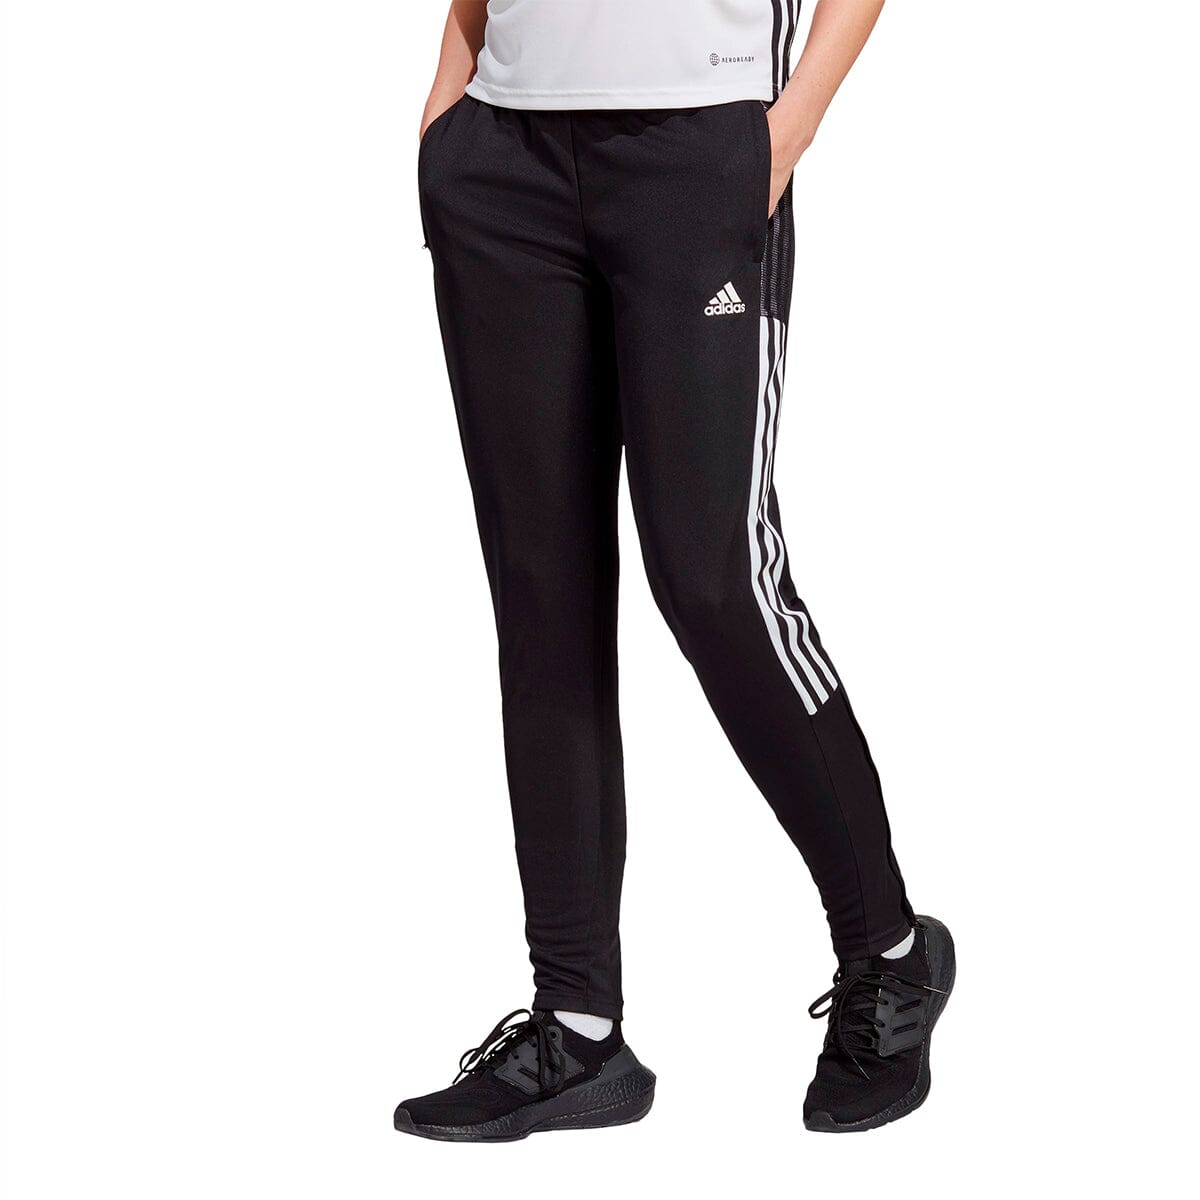 adidas Women's Tiro 21 Training Pants Pants Adidas Small Black/White 